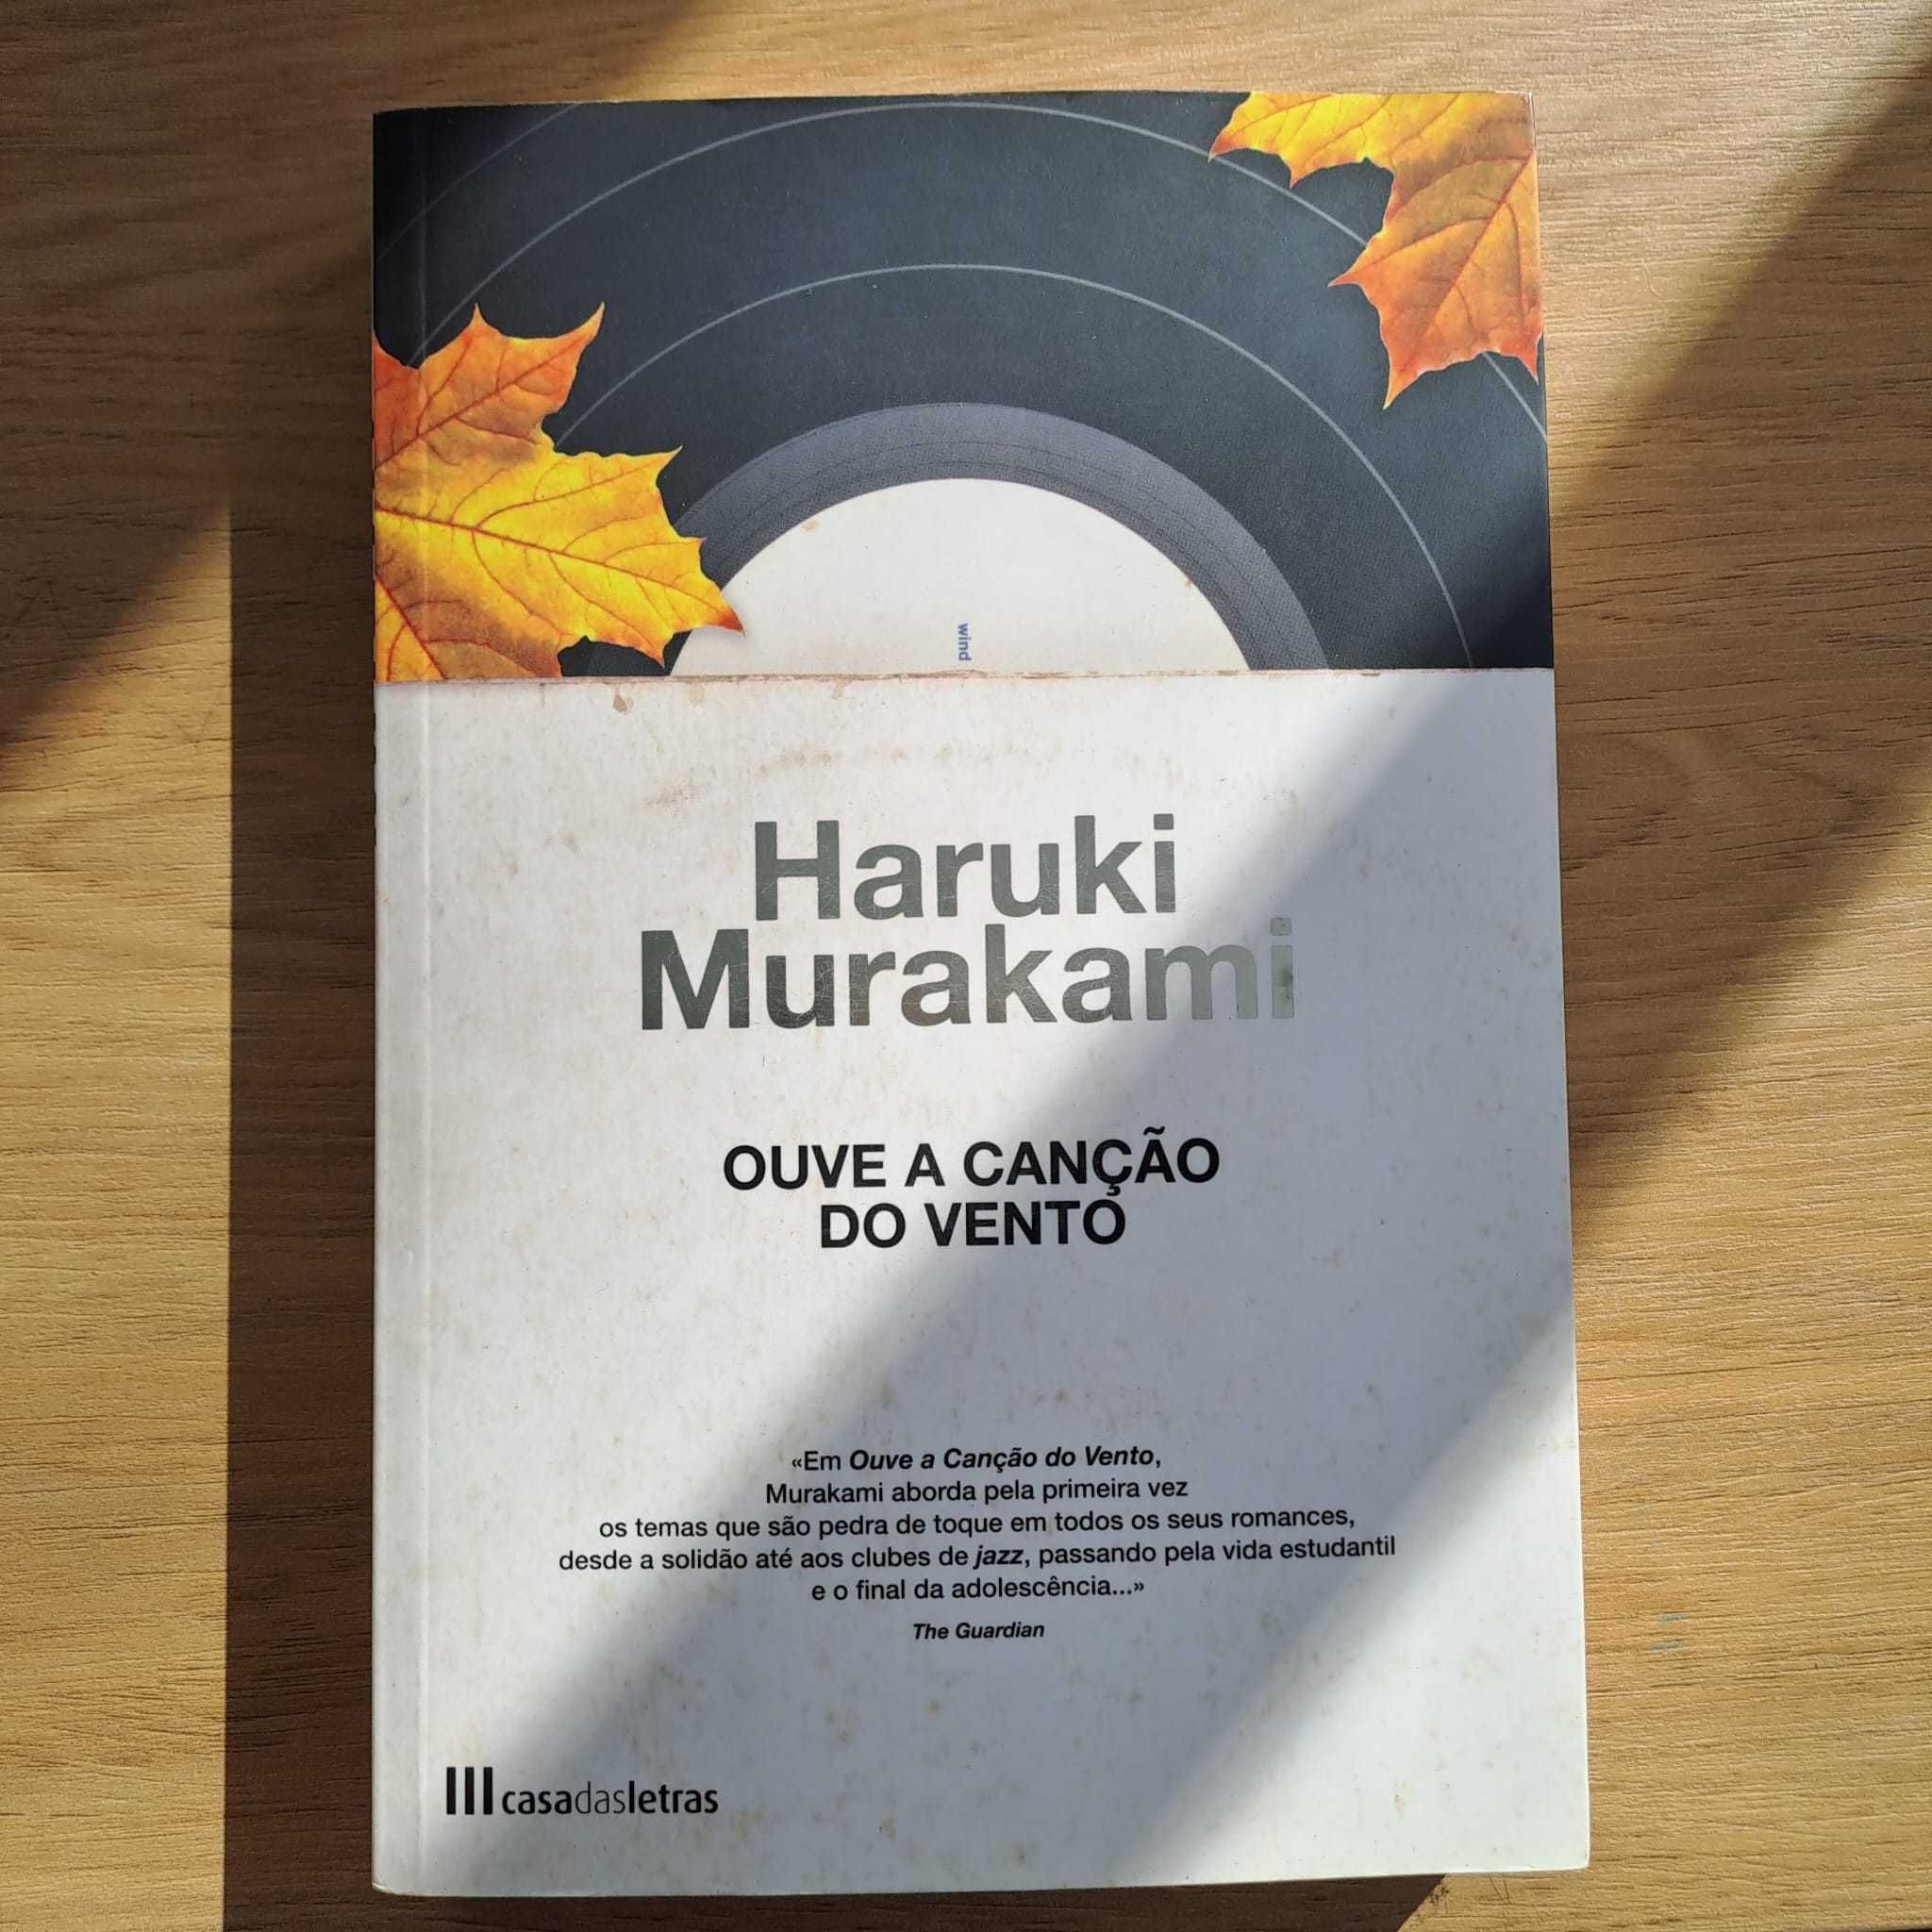 Flíper, 1973, de Haruki Murakami